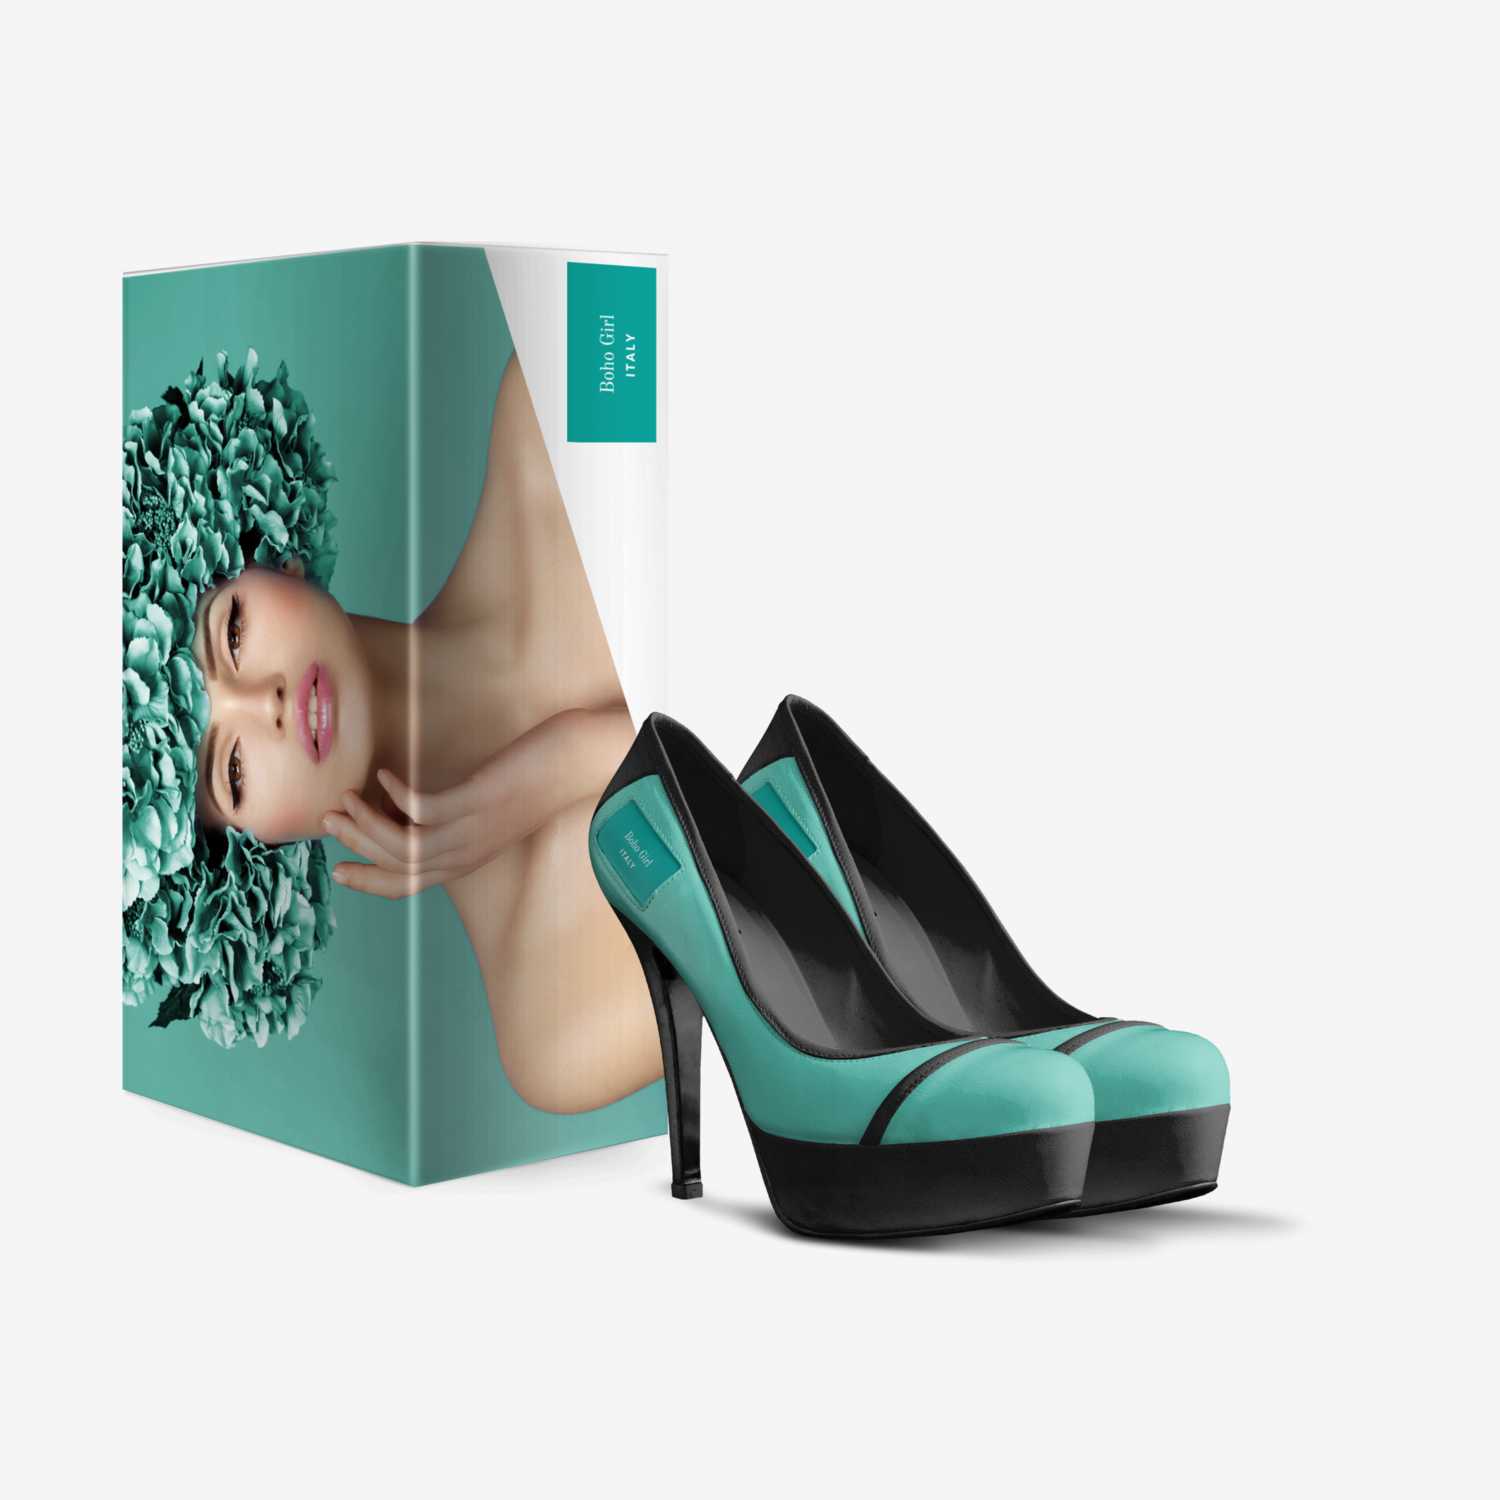 Boho Girl custom made in Italy shoes by Marijke Verkerk Design | Box view